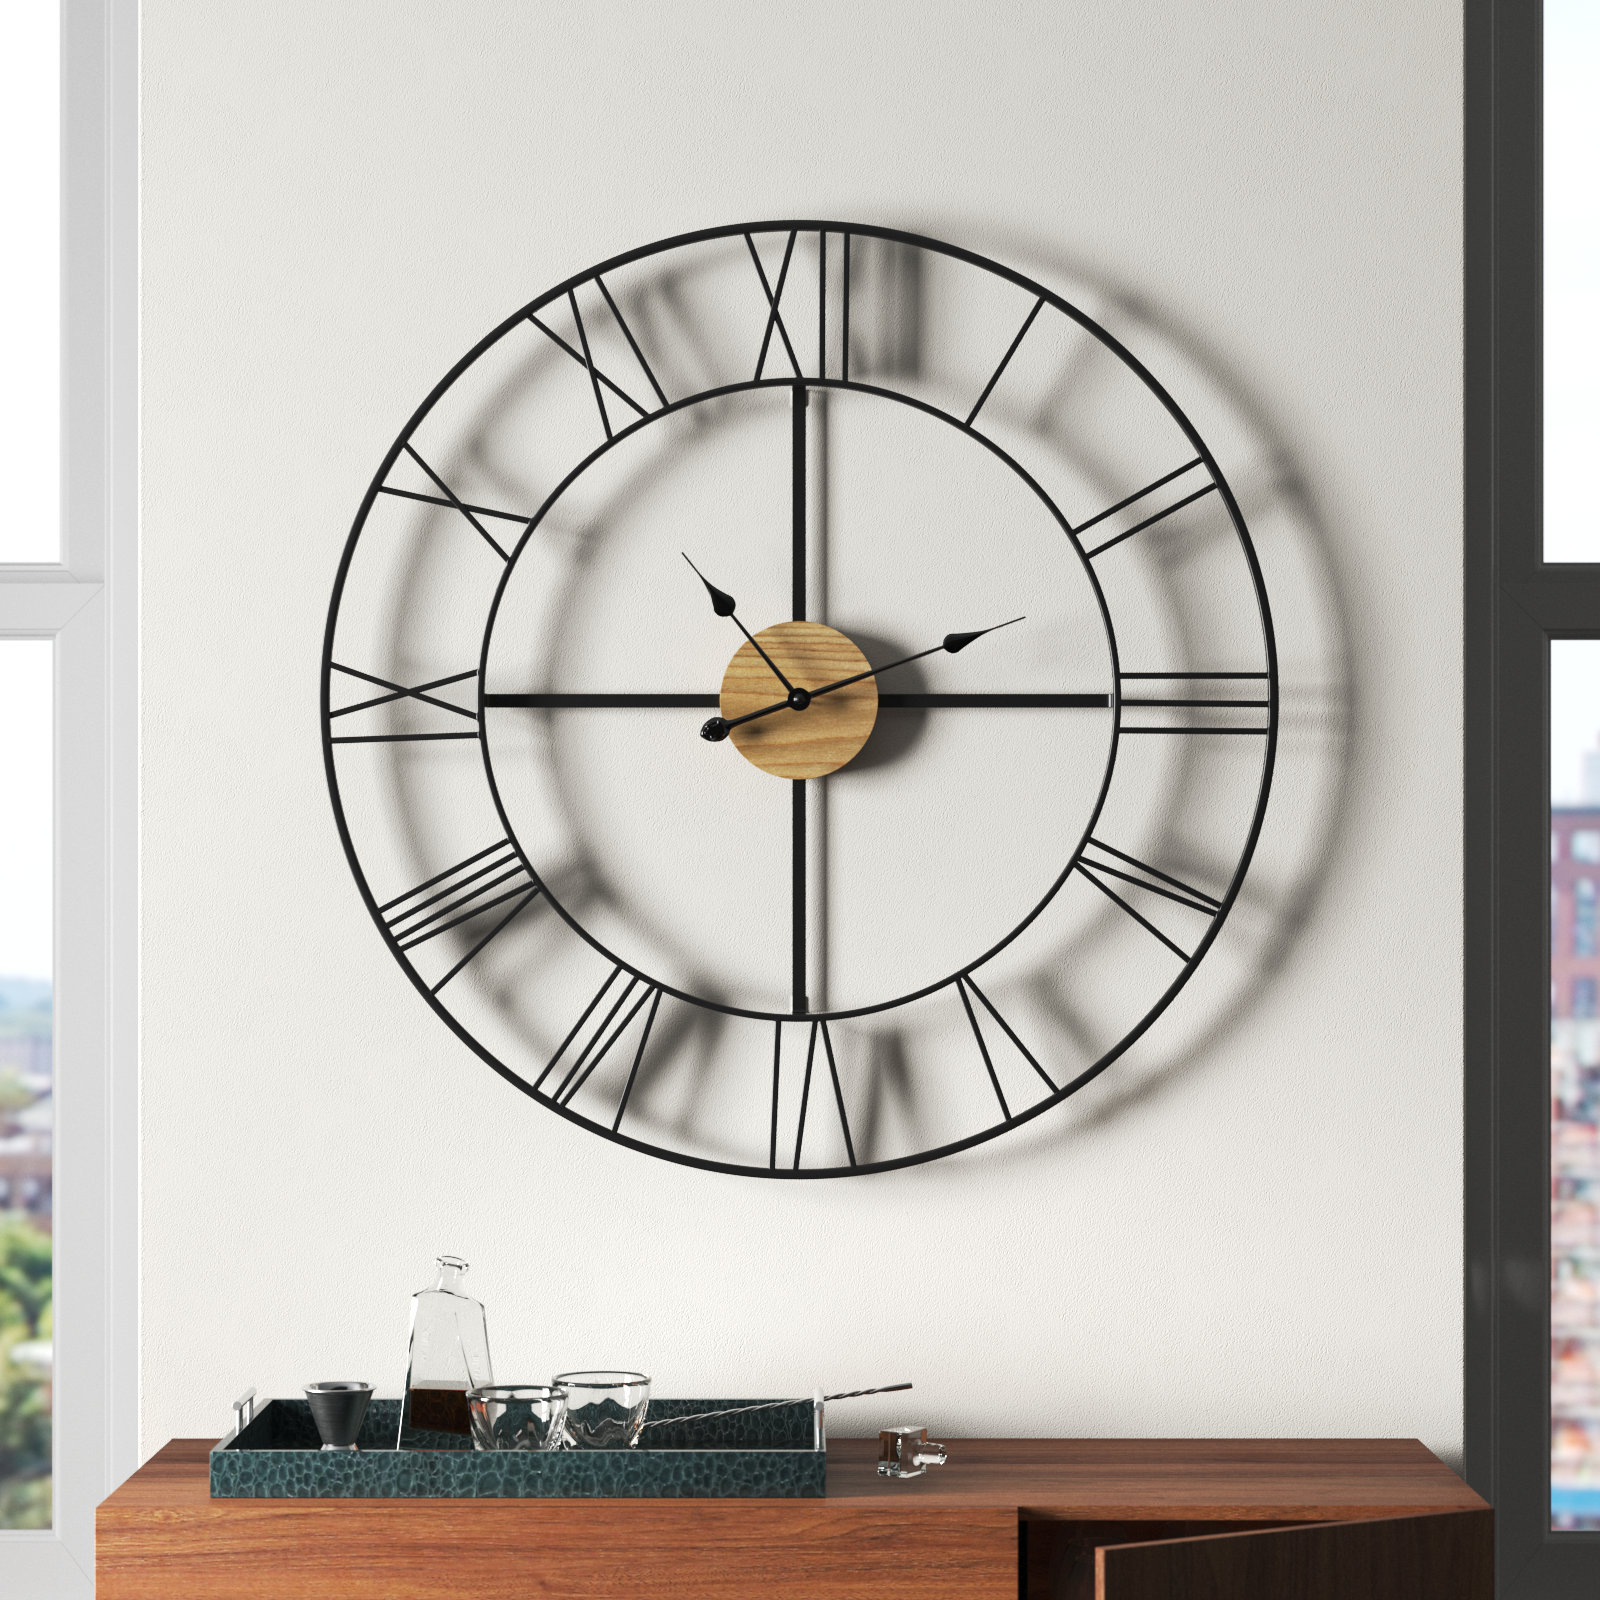 Modern Metal Wall Clock, Large Wall Clock, Non-ticking Clocks for Wall,  Gold Wall Clock, Minimalist Clock, Living Room Decor, Home Decor 